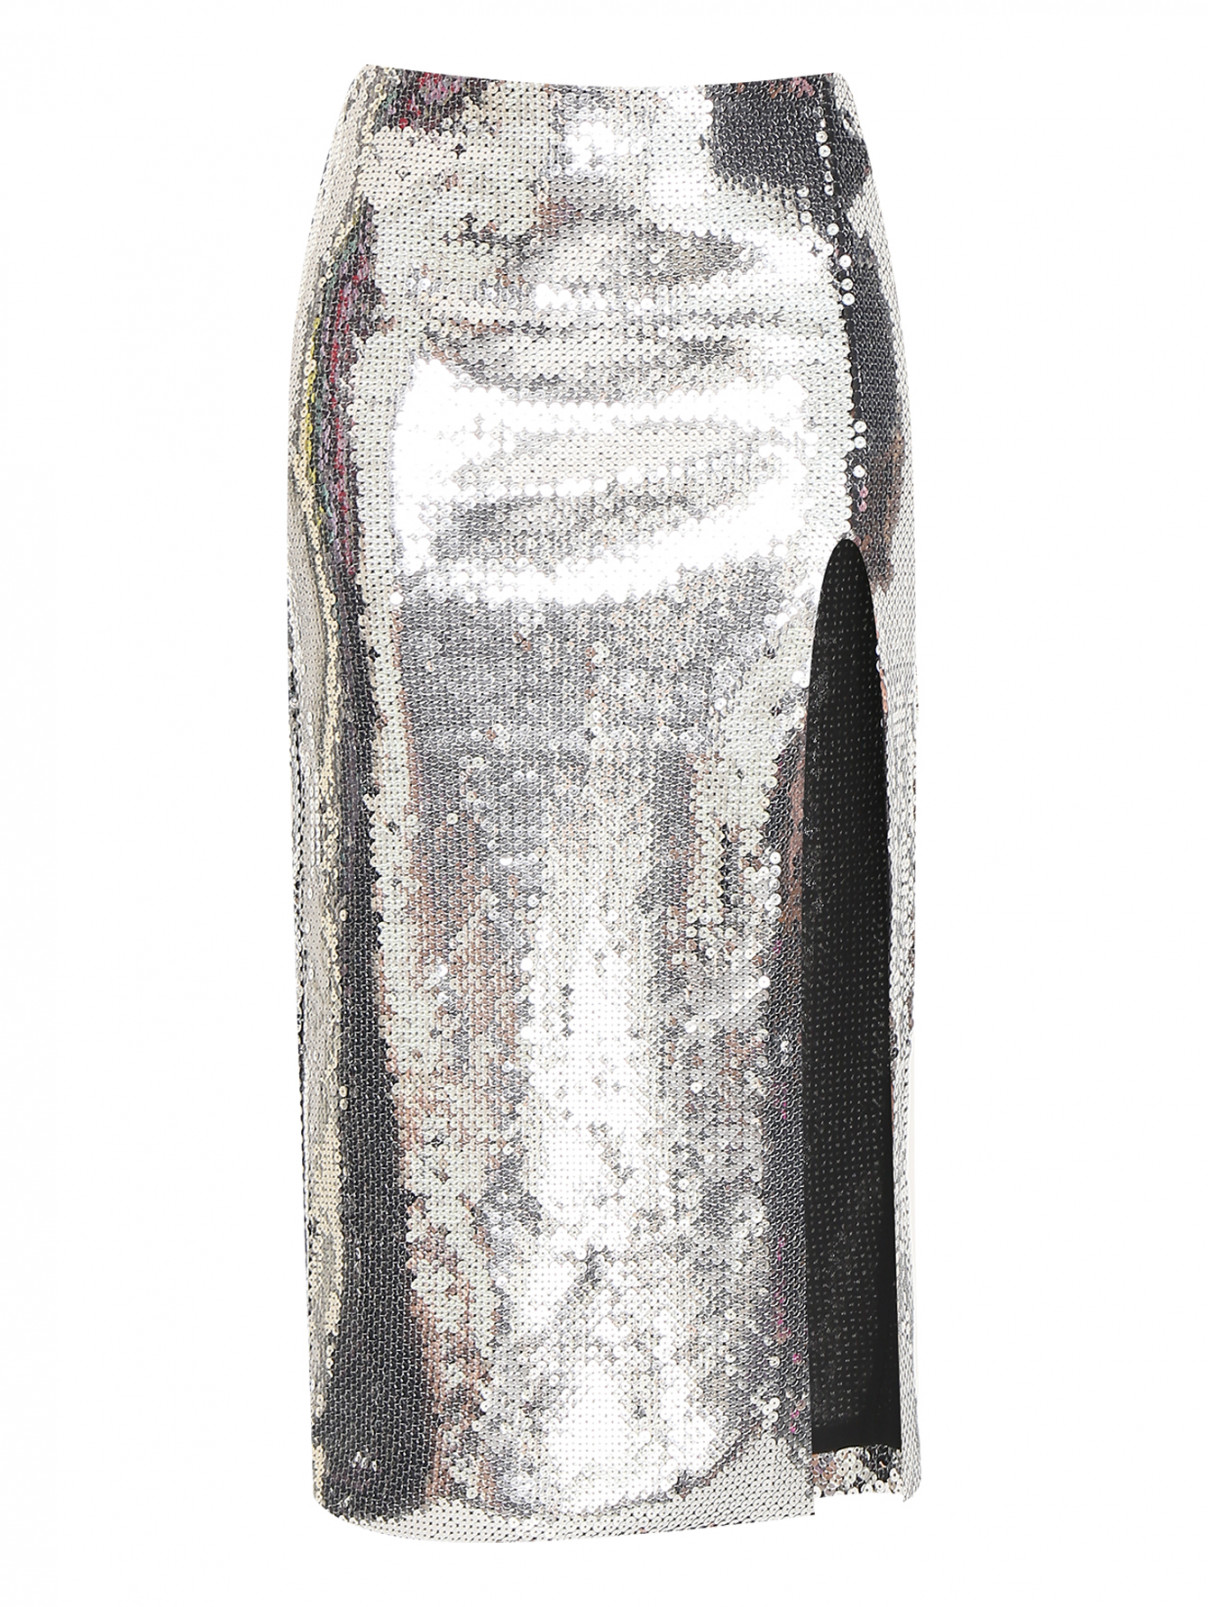 Юбка с пайетками Semicouture  –  Общий вид  – Цвет:  Серый